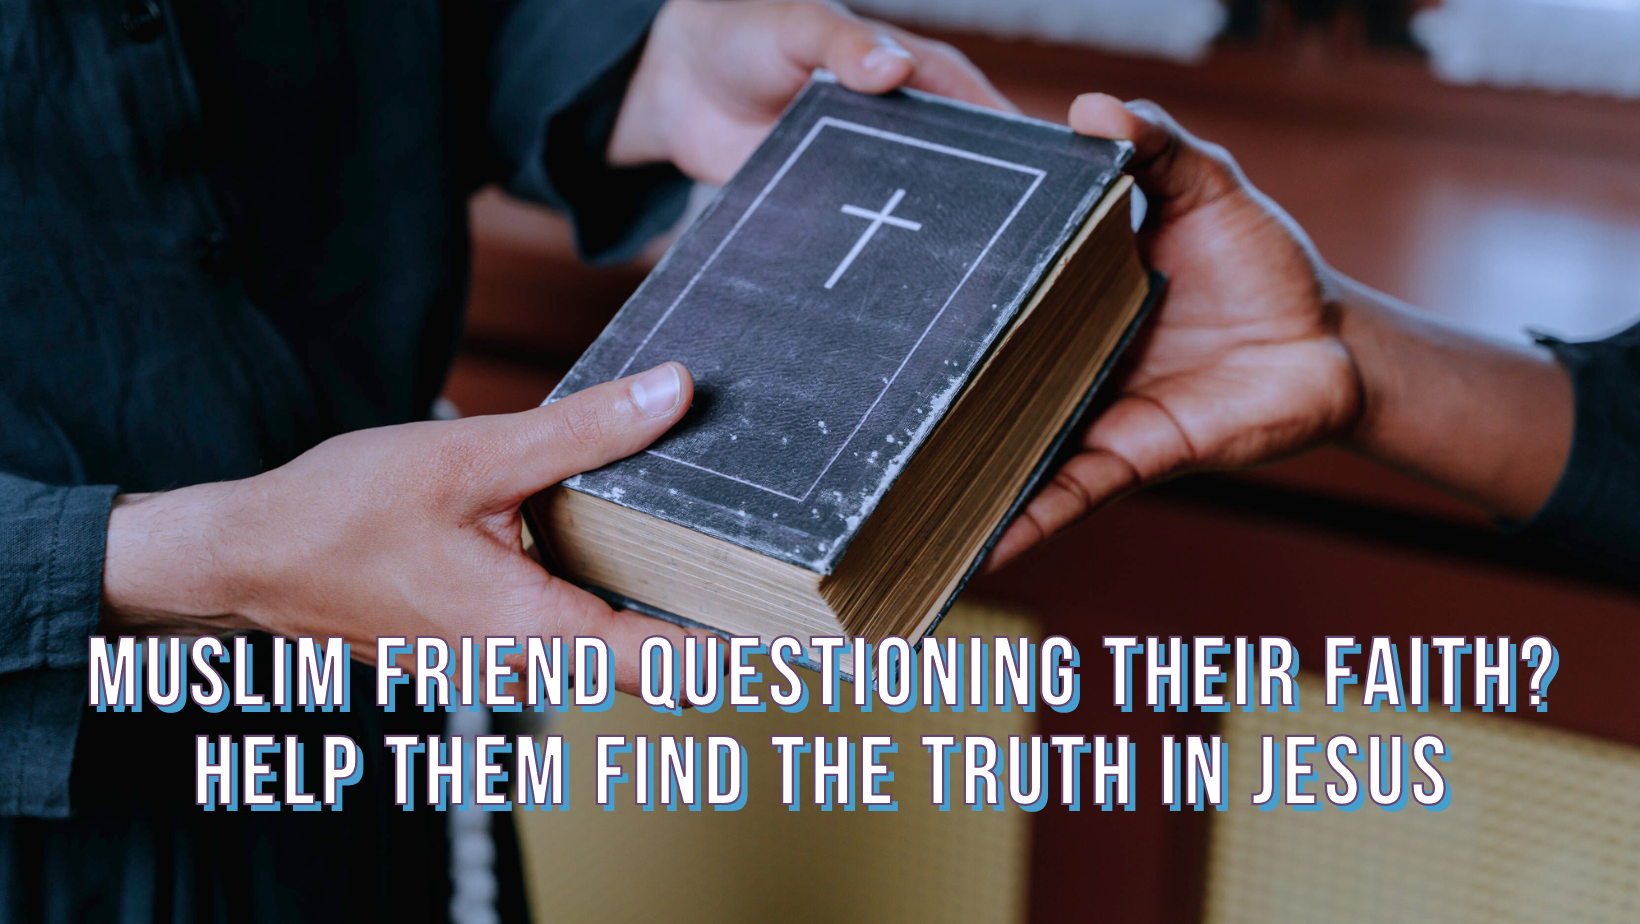 Blog title image - Giving friend a Bible